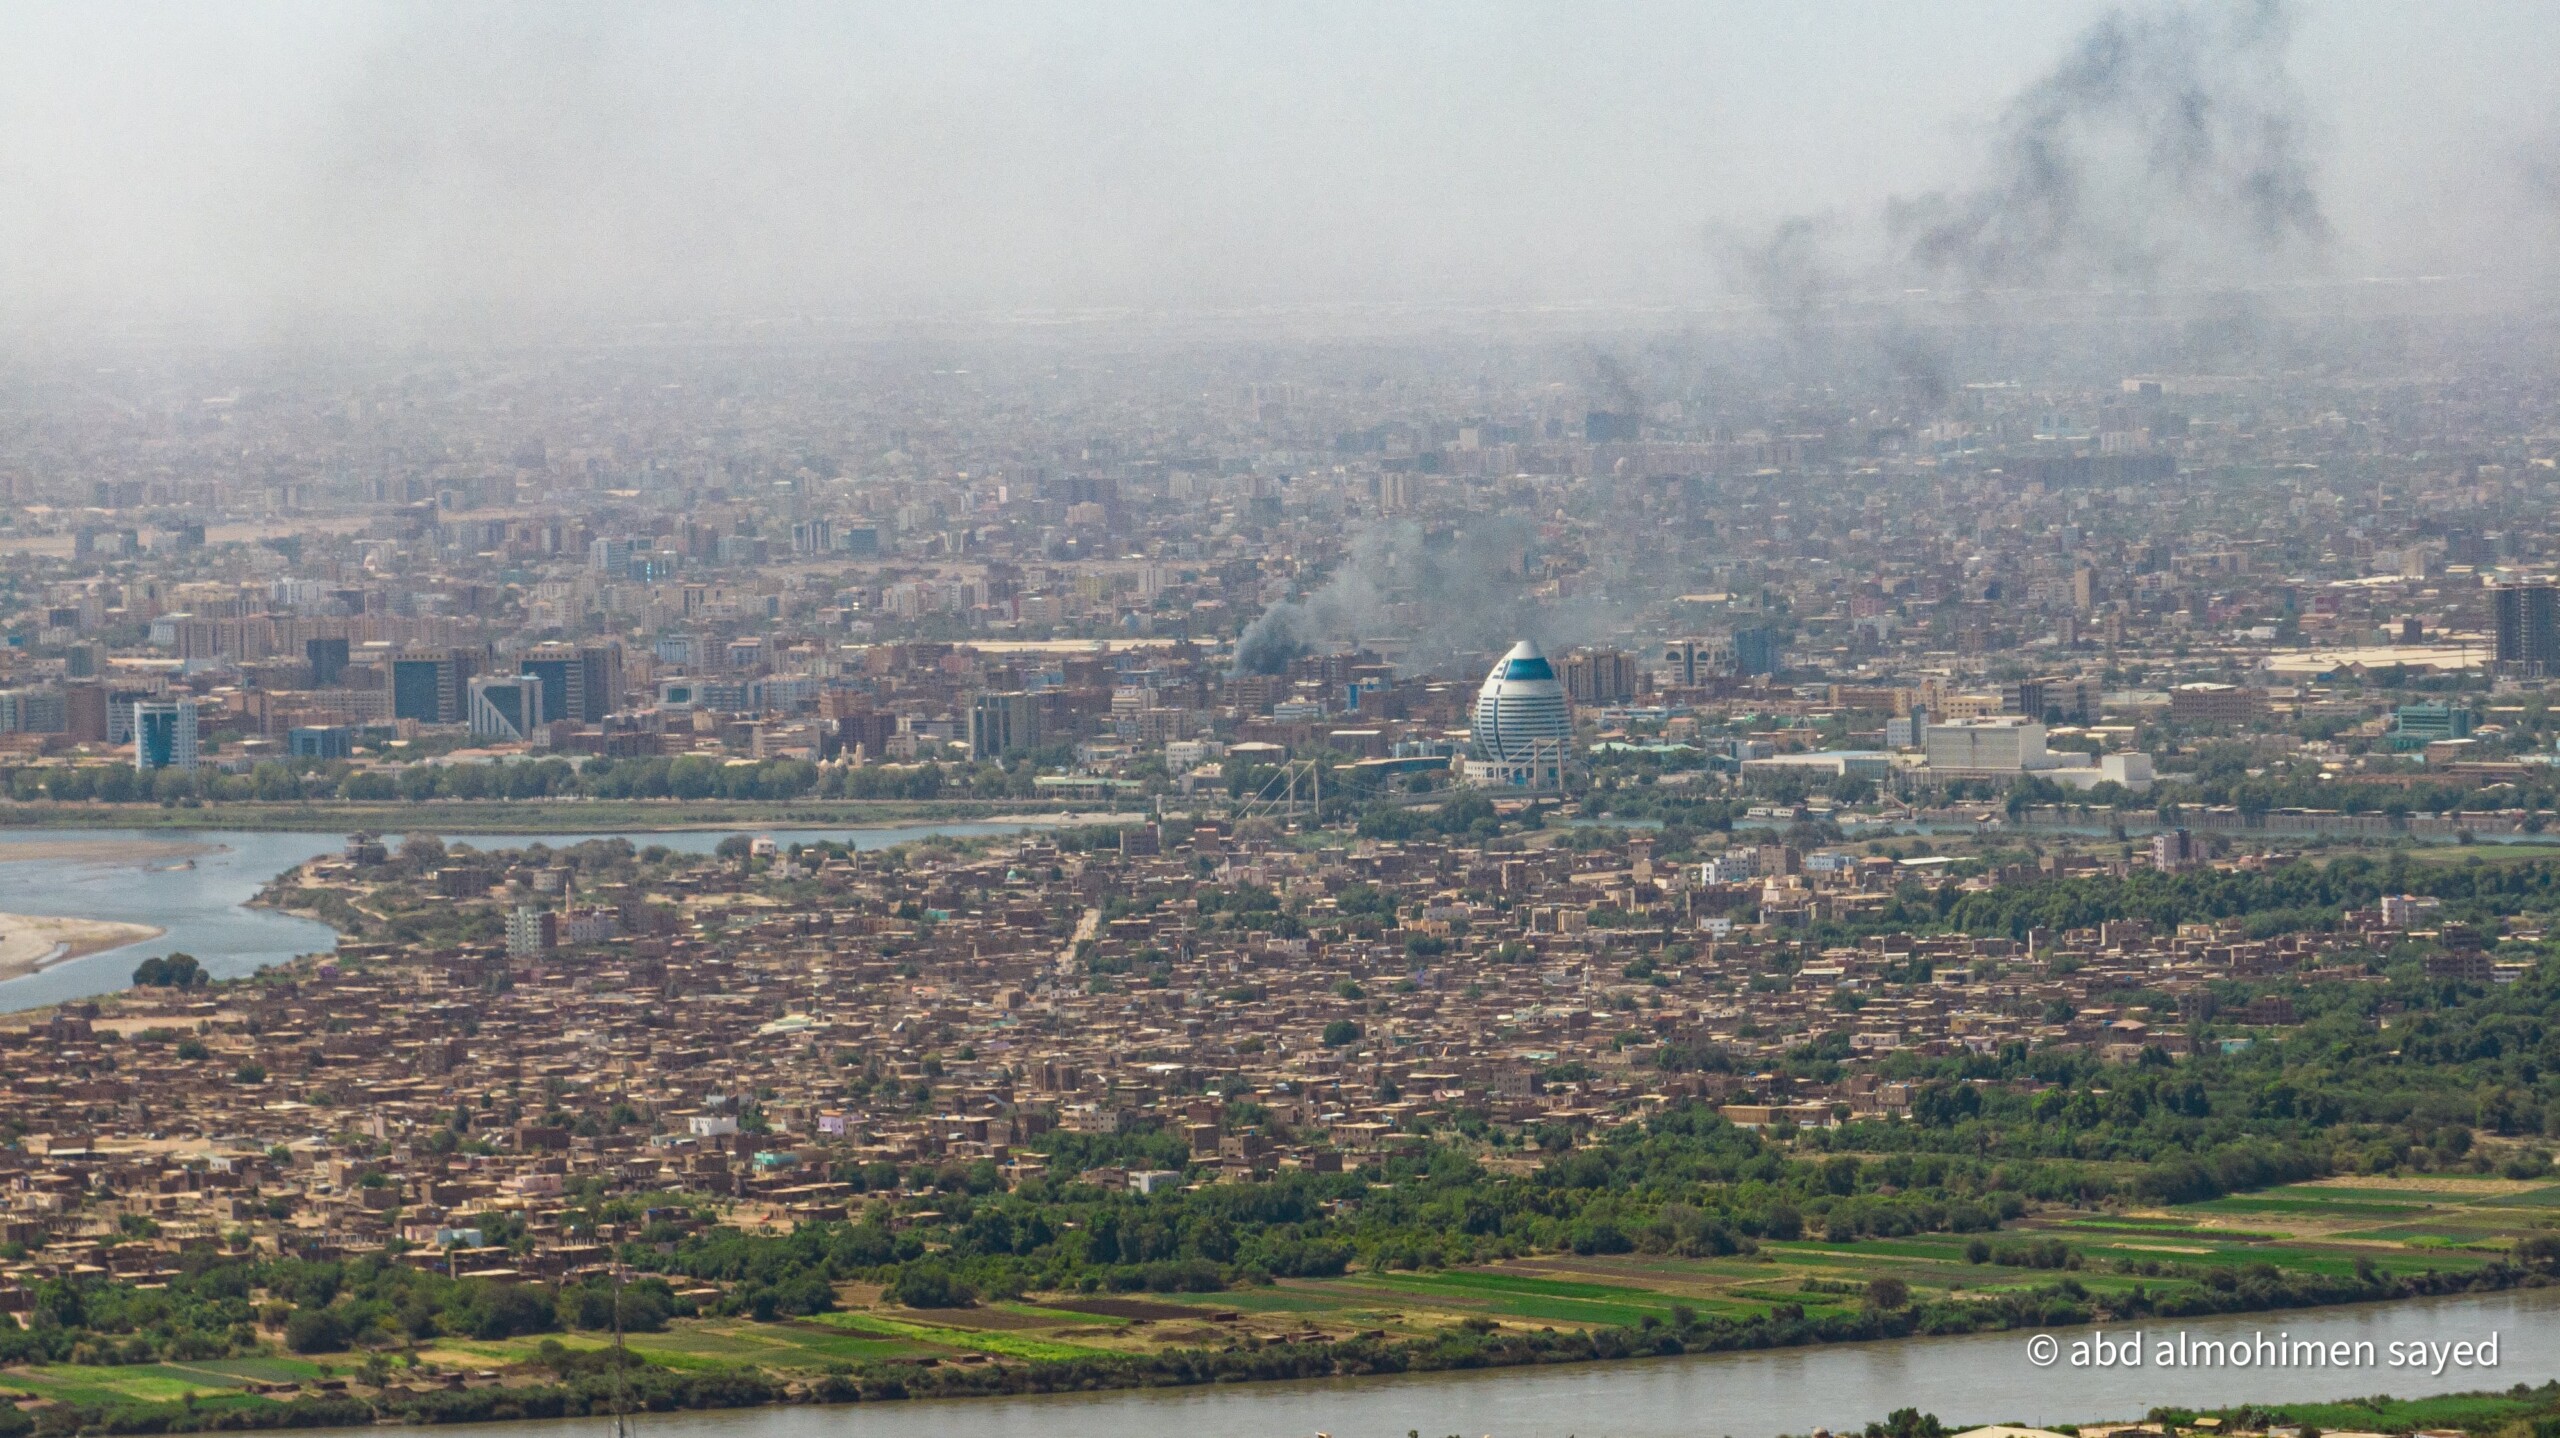 Airstrikes in Sudan capital, forced evacuations continue - Dabanga Radio TV Online